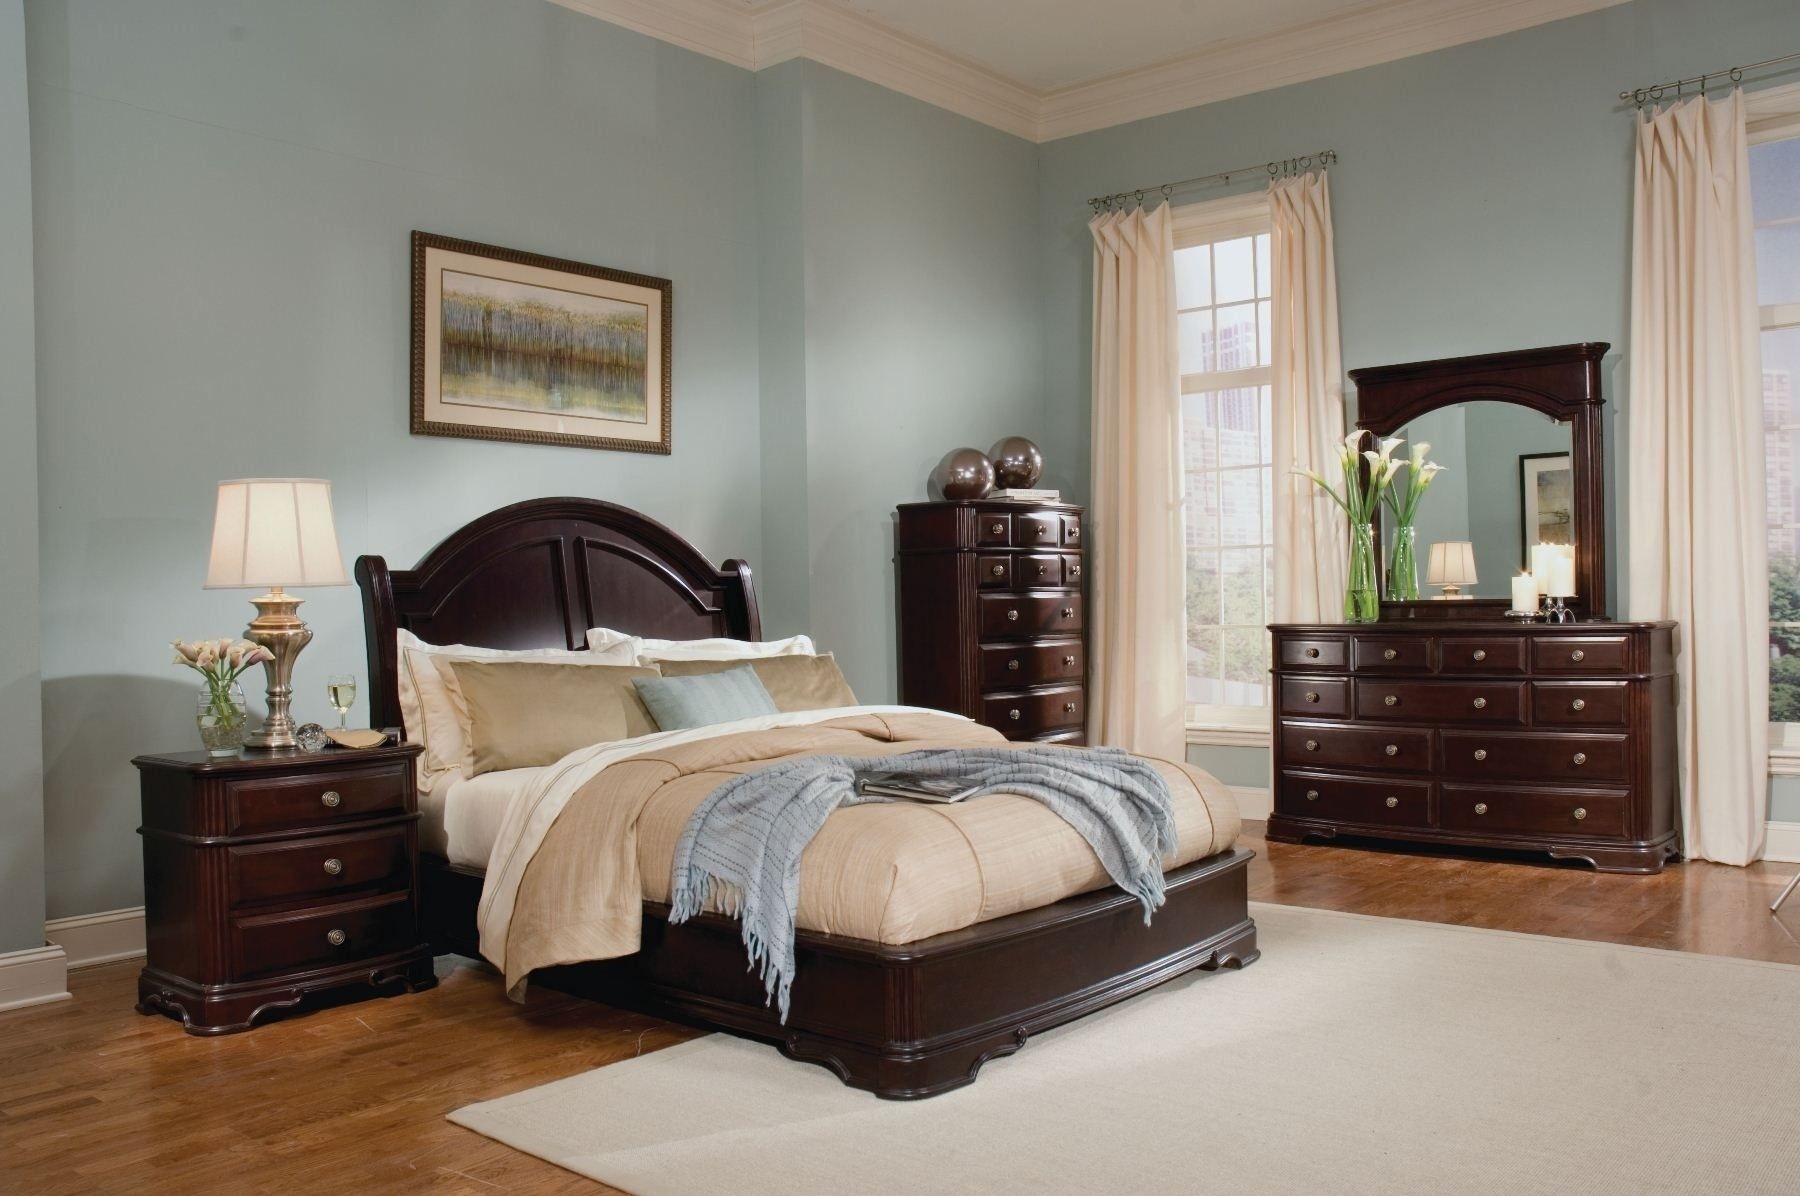 updating mahogany bedroom furniture